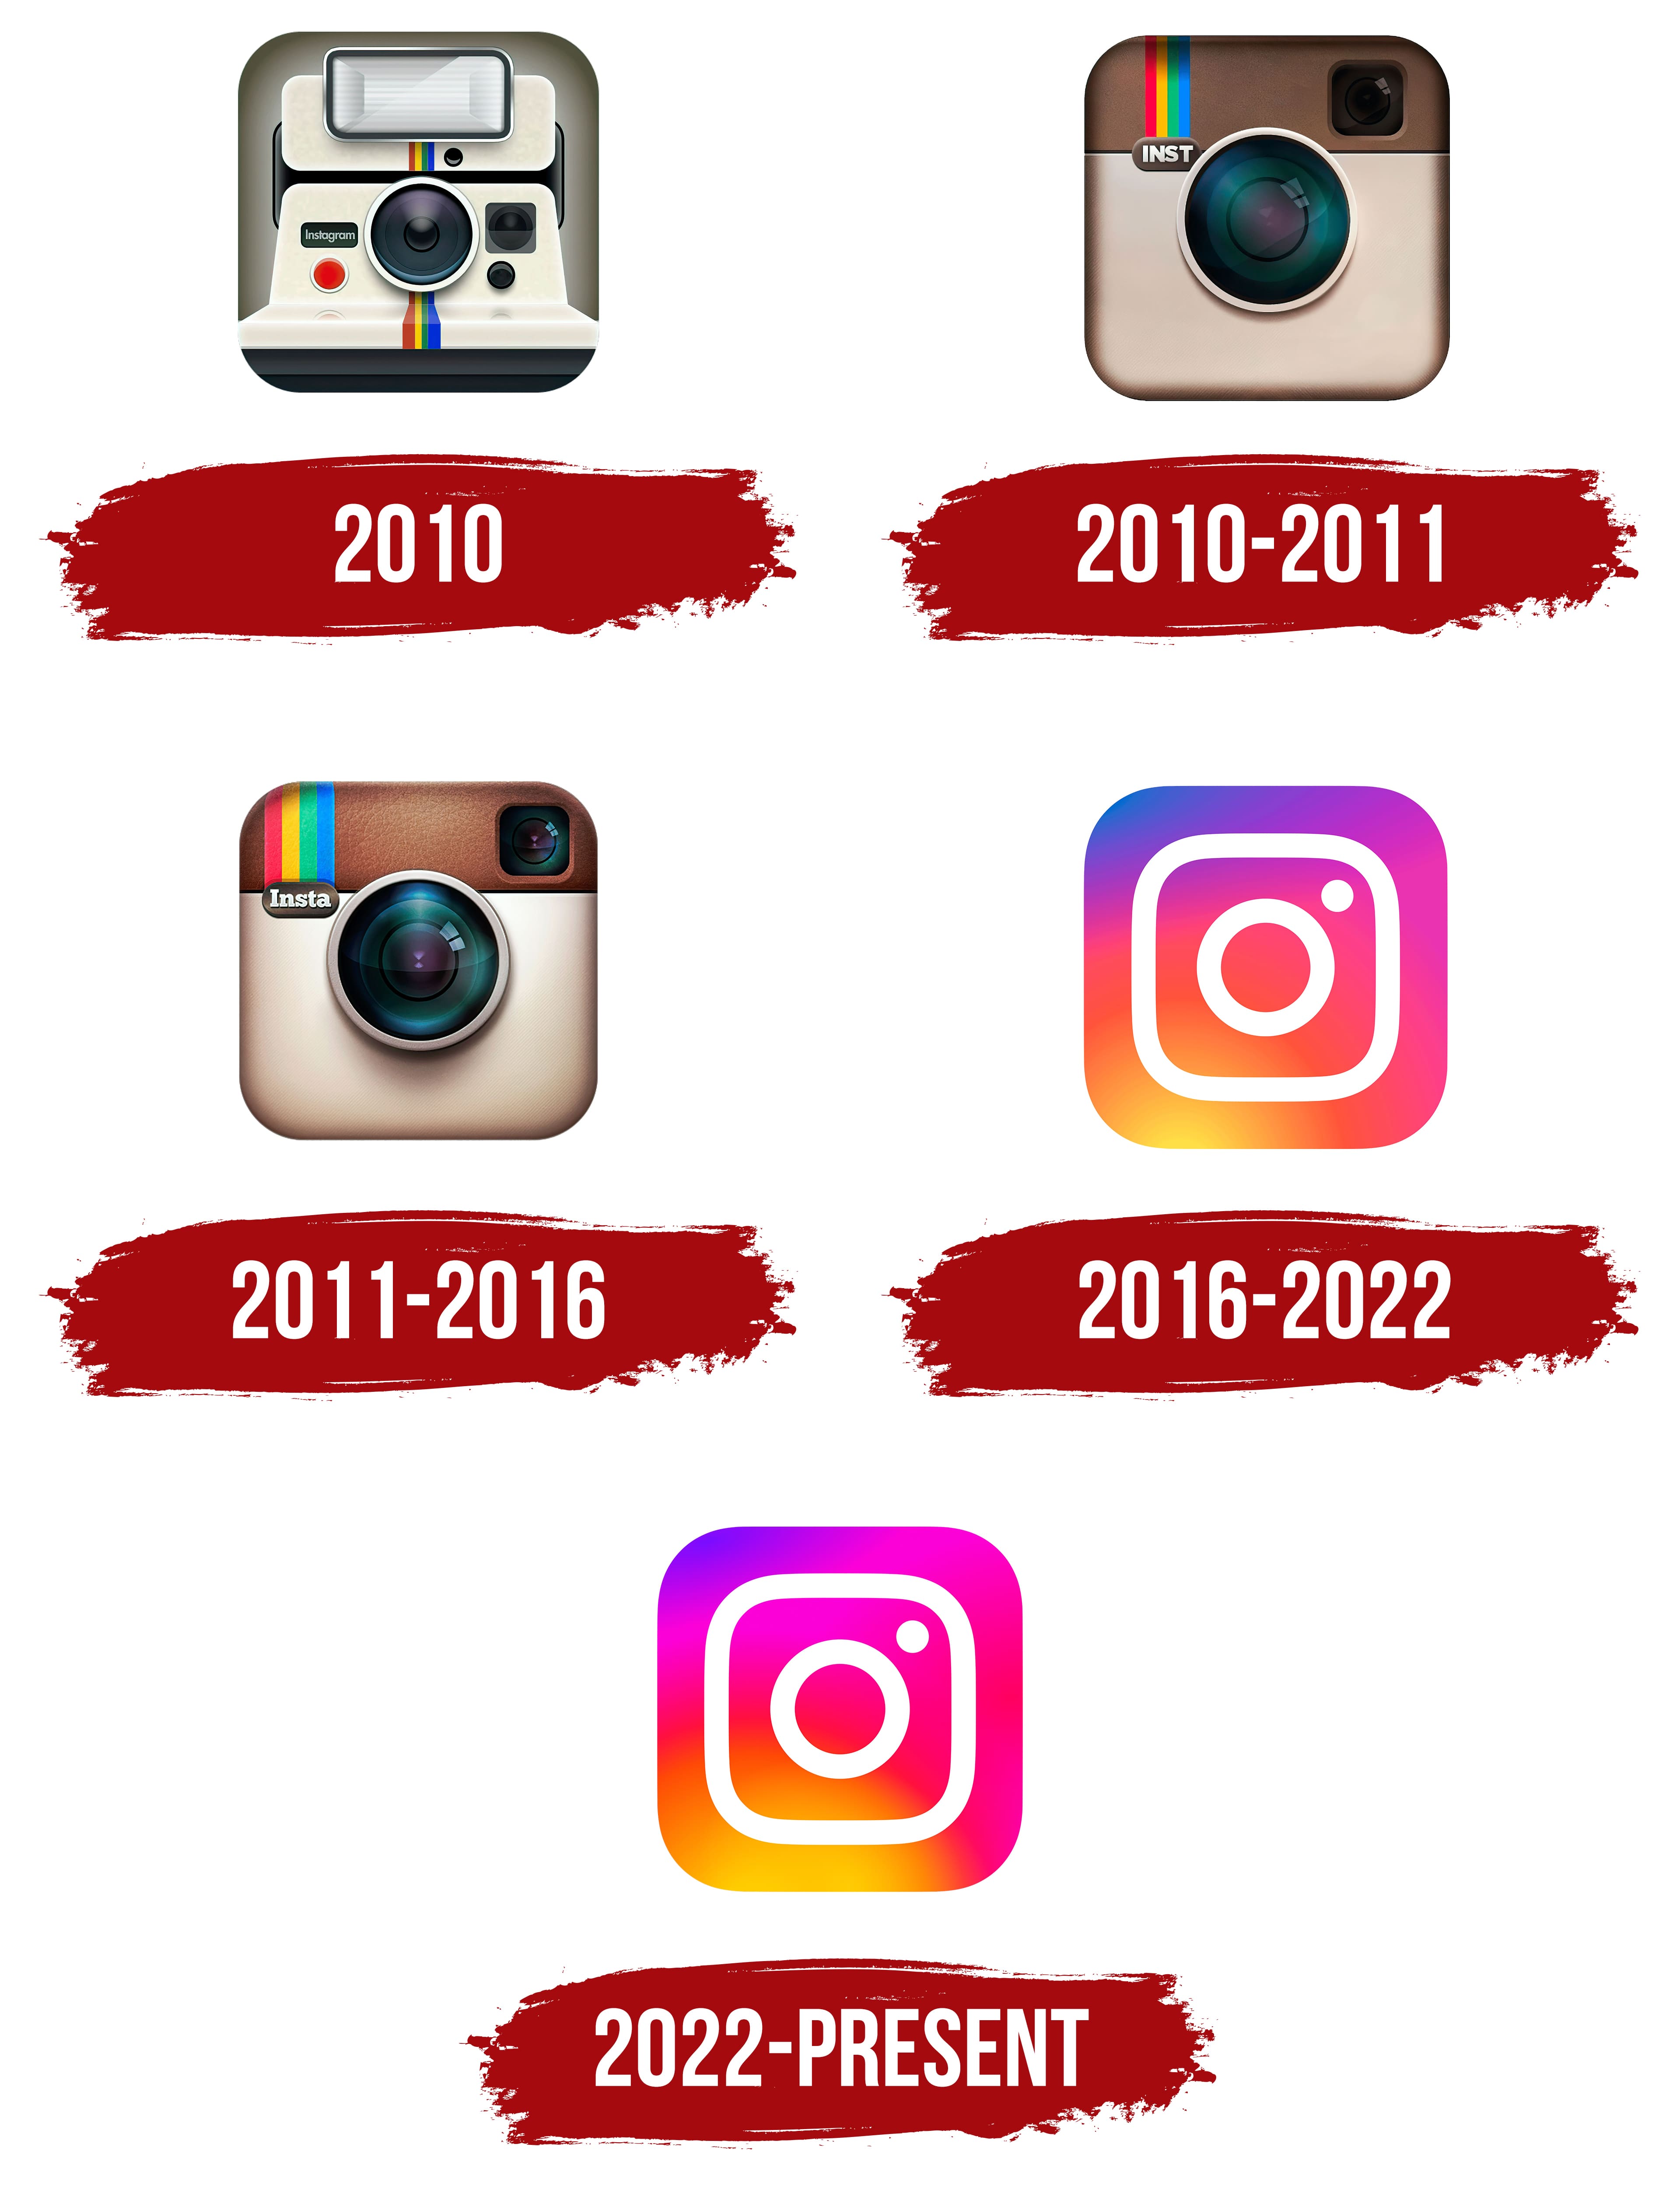 New Instagram Icon Design